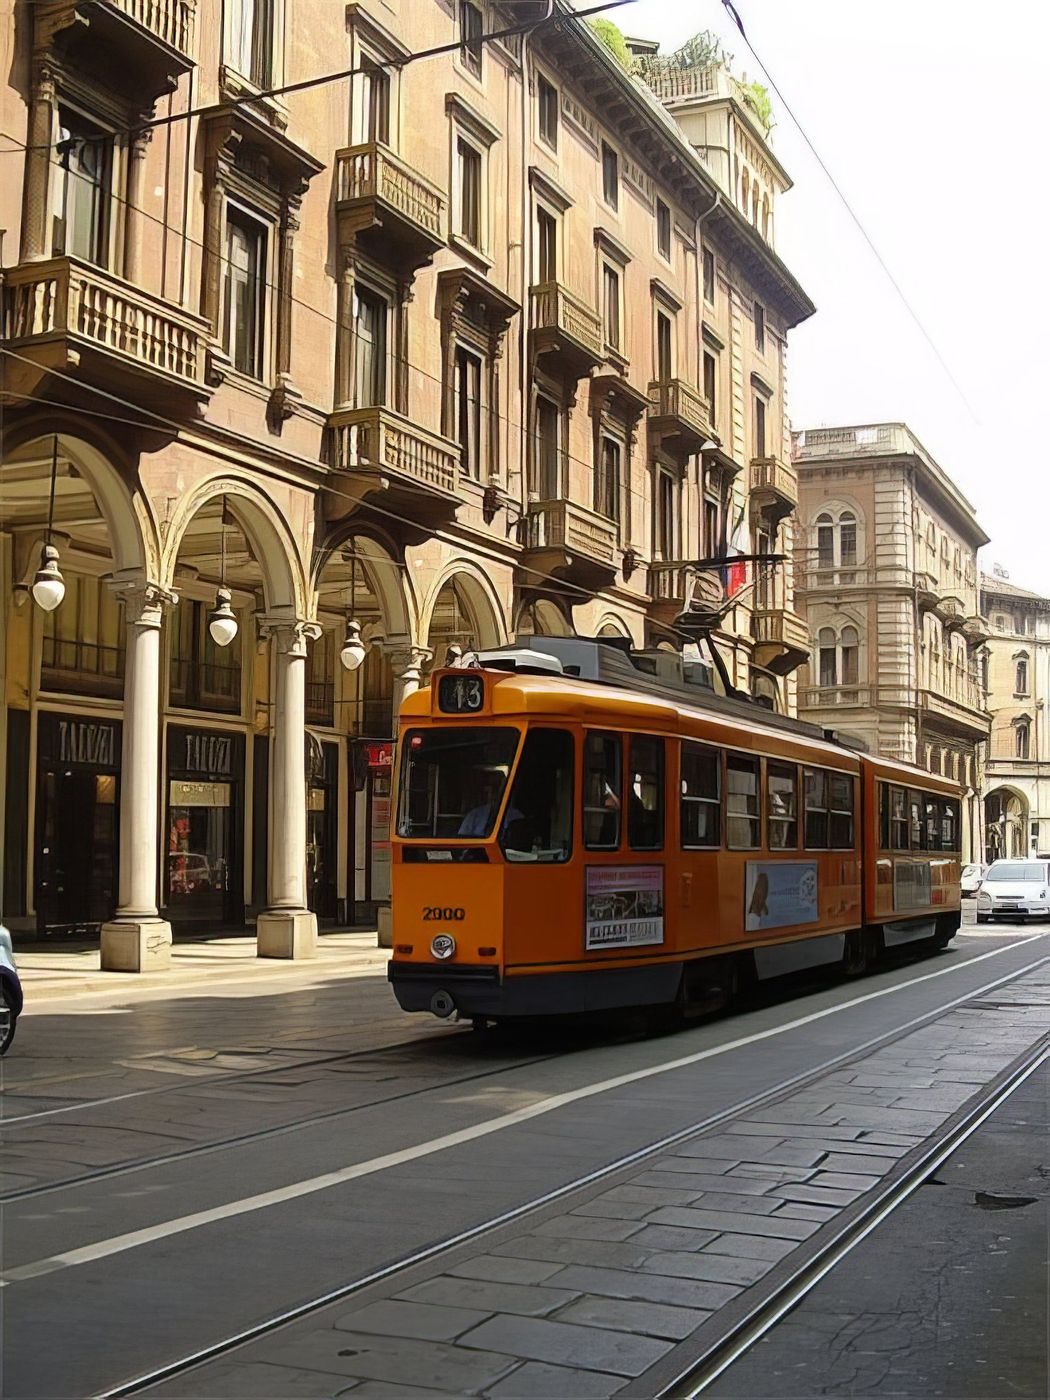 Torino (Turin)